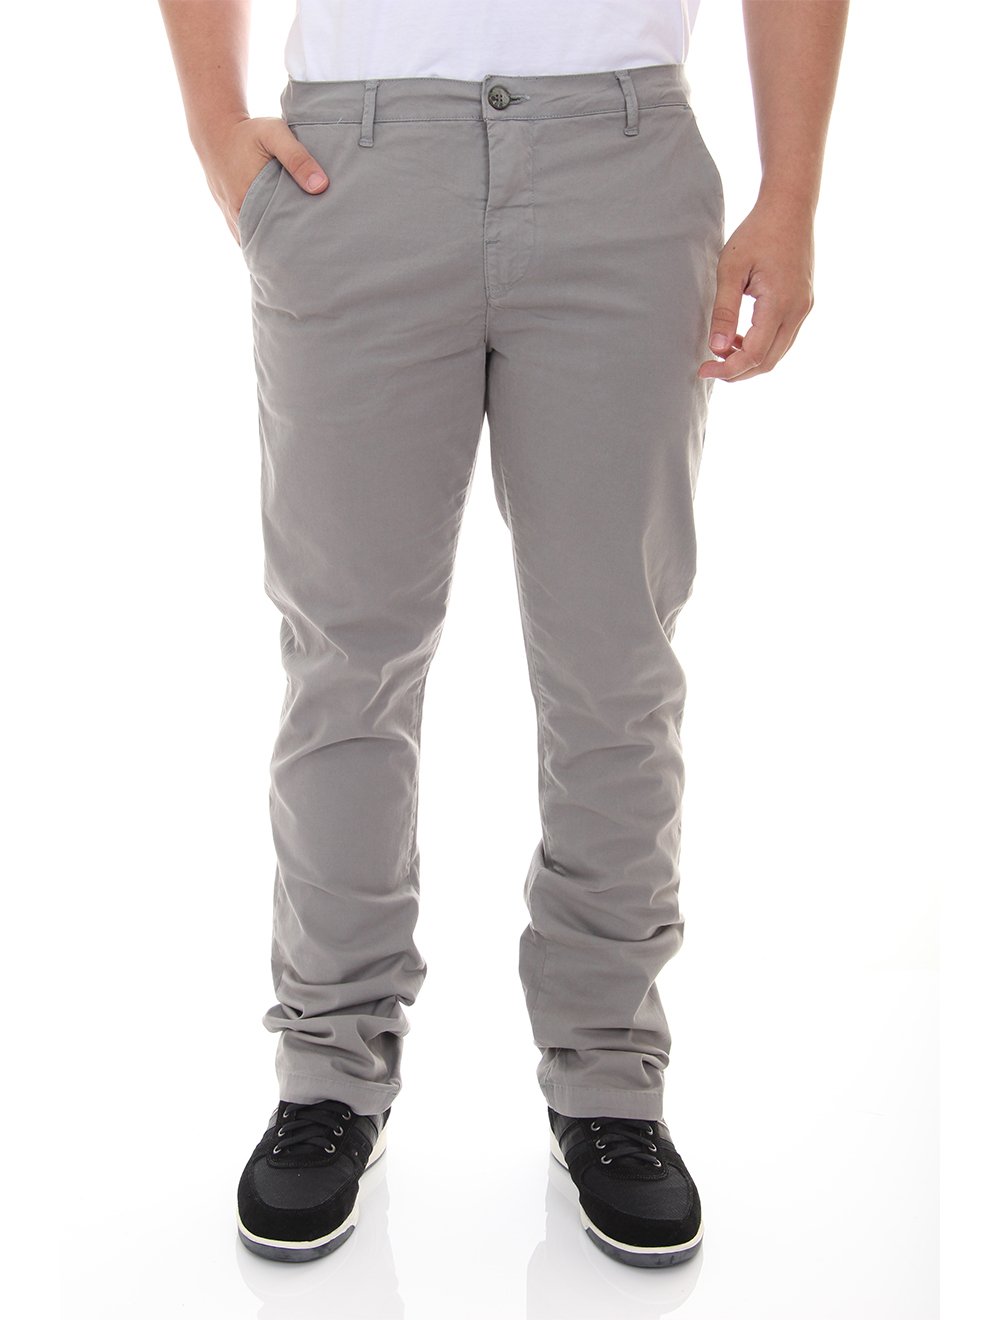 en color gris  Moda, Roupas, Modelos de calças